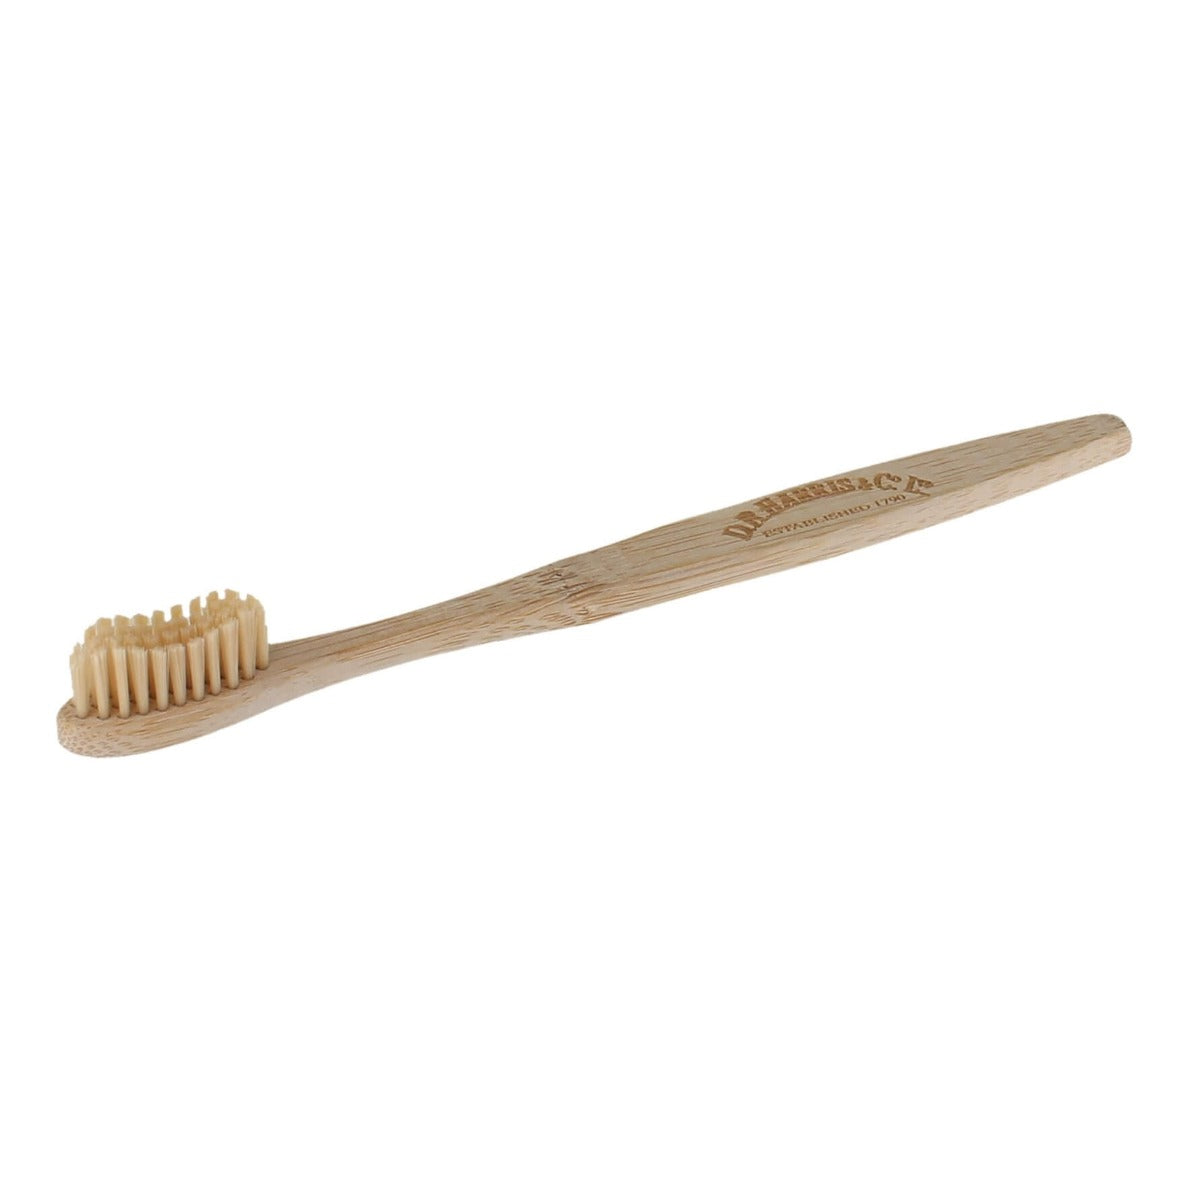 D R Harris Biodegradable Bamboo Toothbrush - Natural Colour Bristles